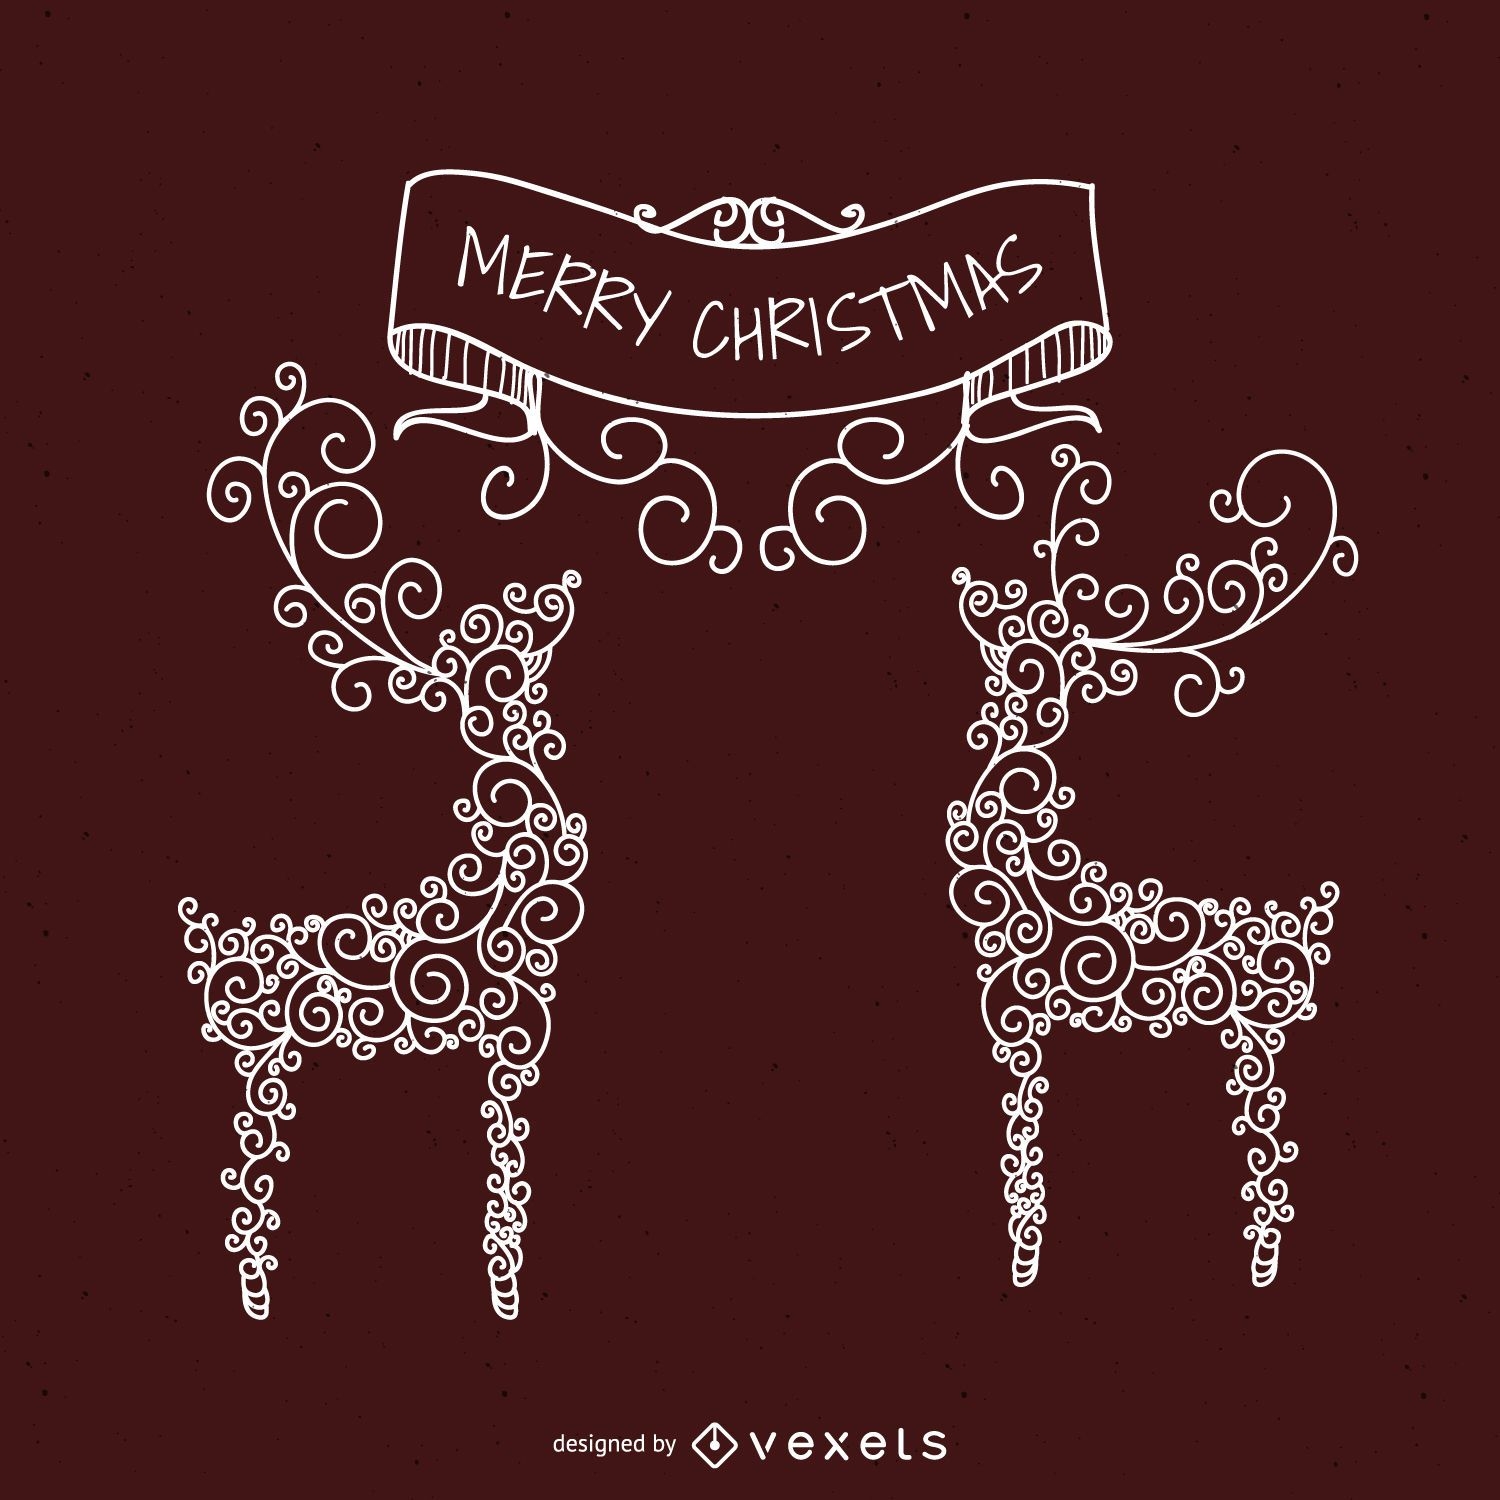 Deer swirls Christmas illustration